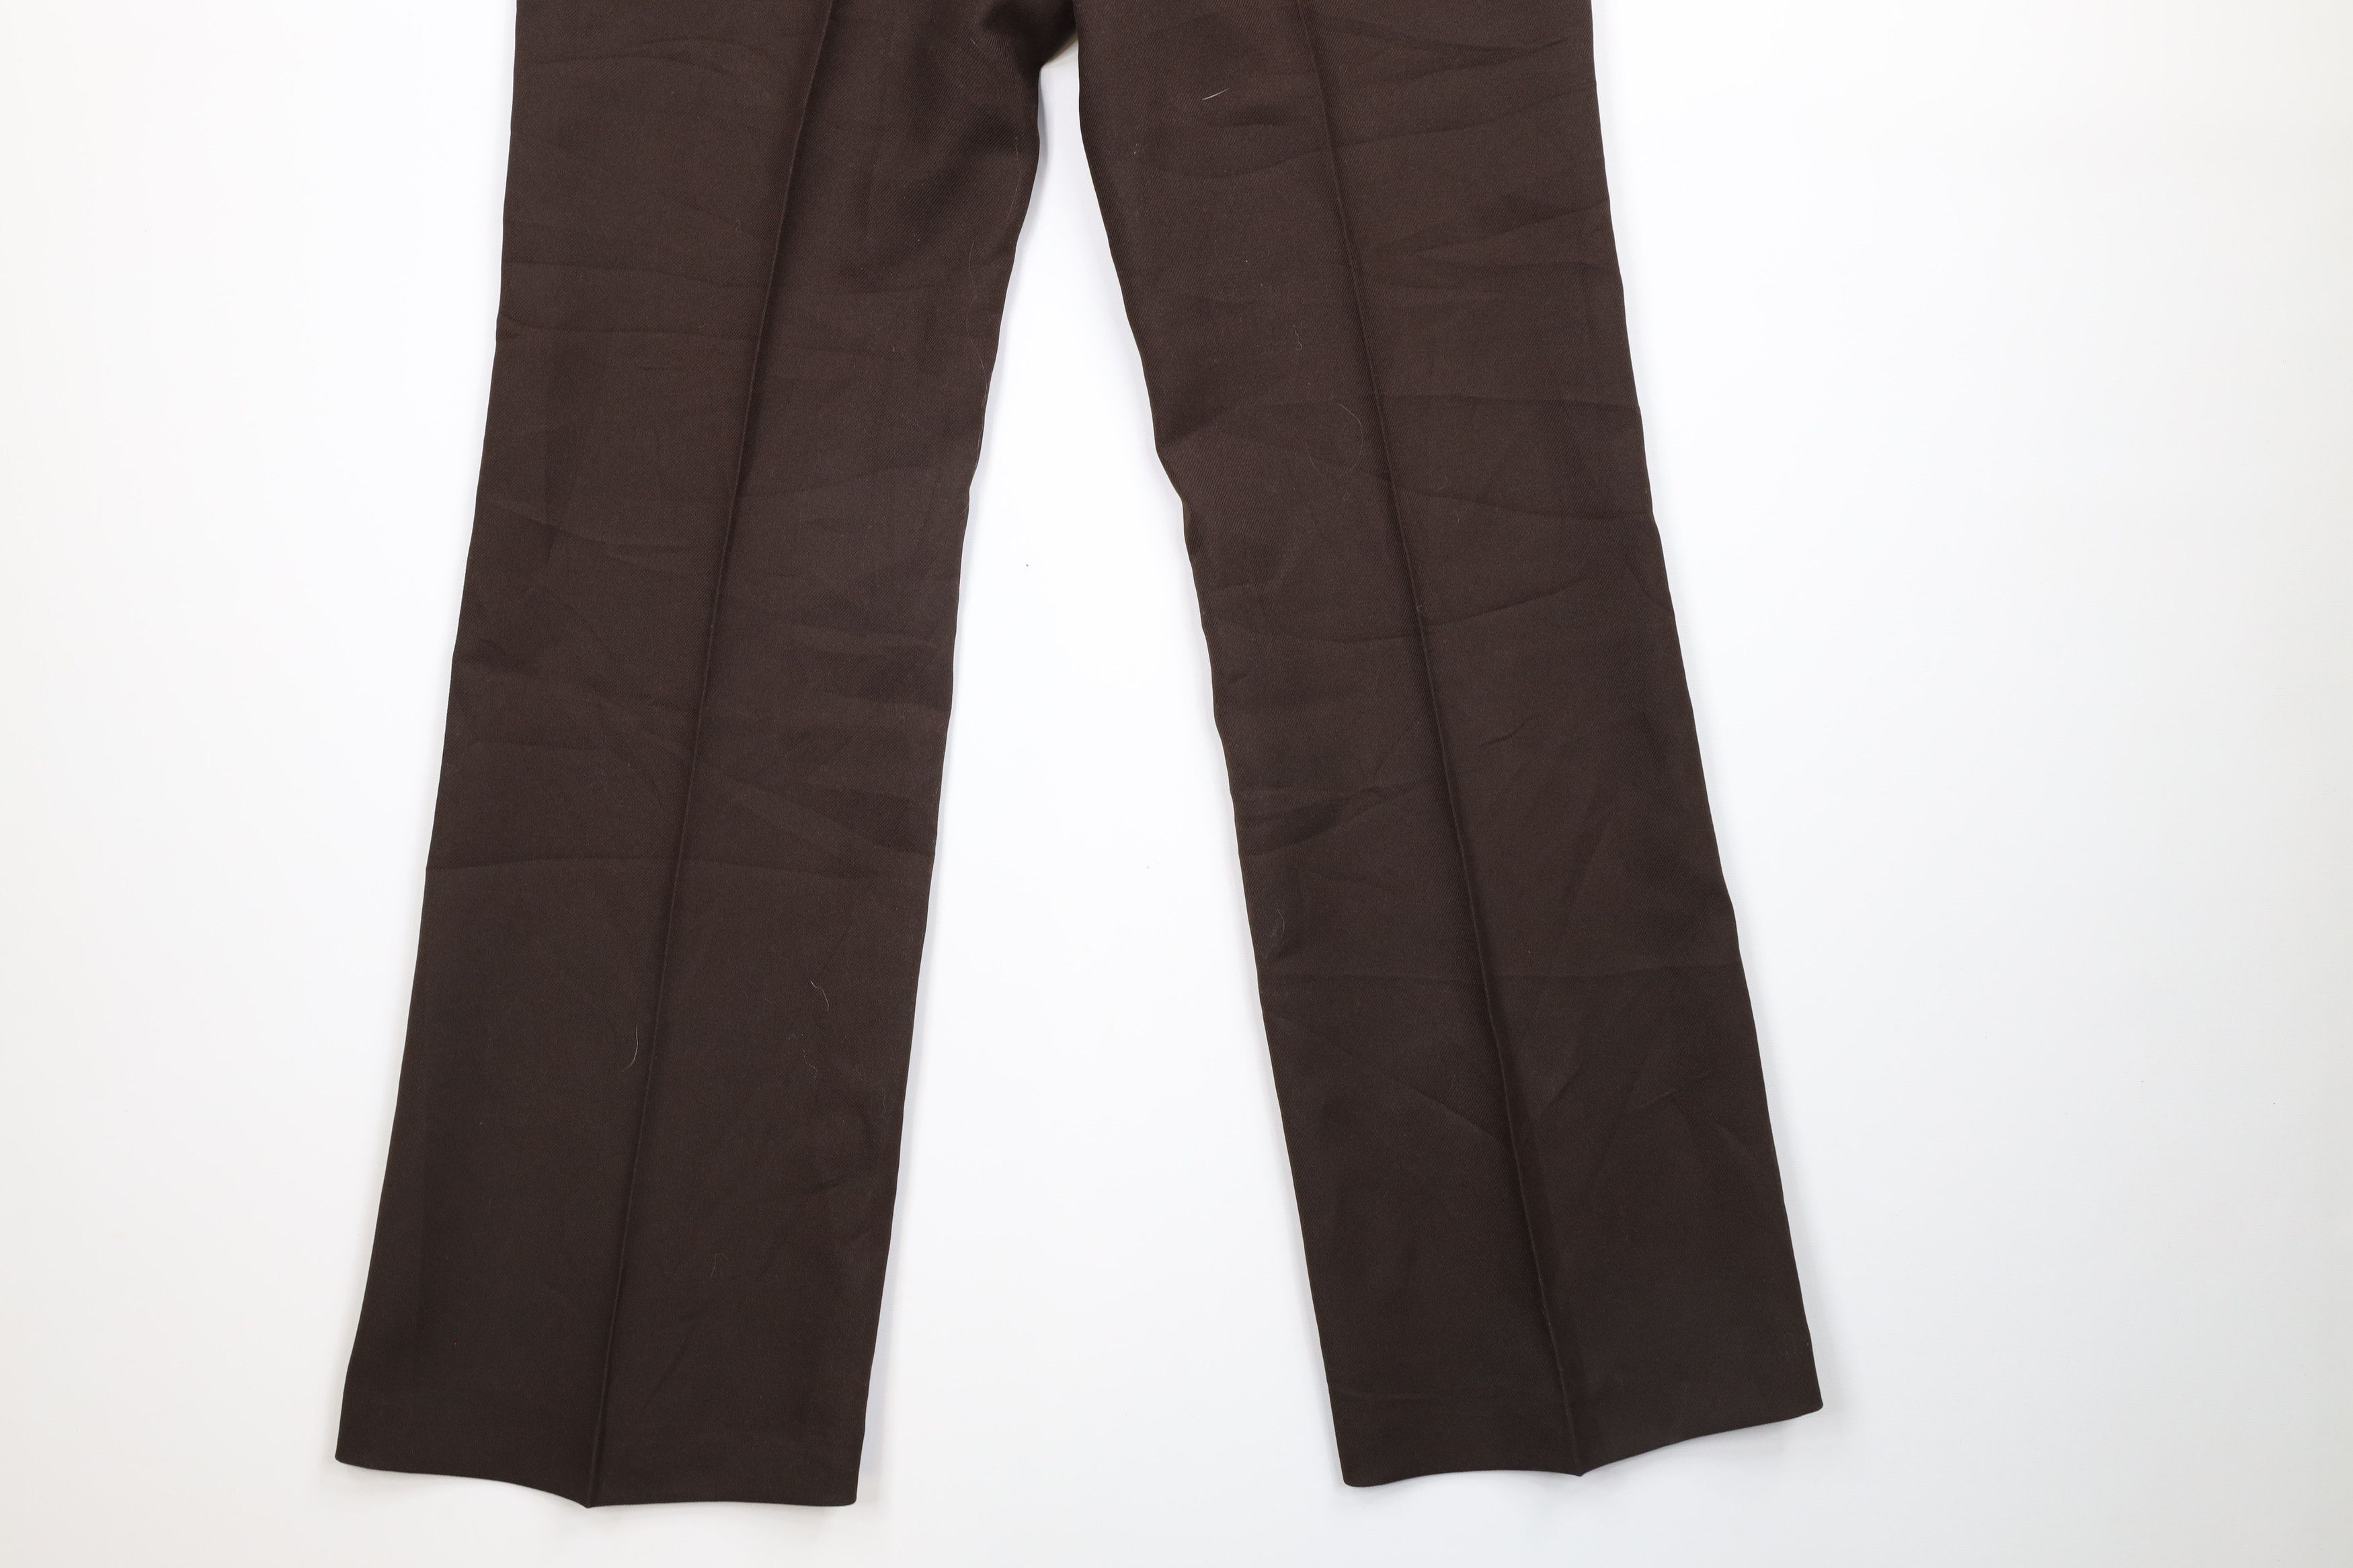 Vintage Vintage 70s Streetwear Knit Flared Bell Bottoms Pants Brown Size US 32 / EU 48 - 10 Preview